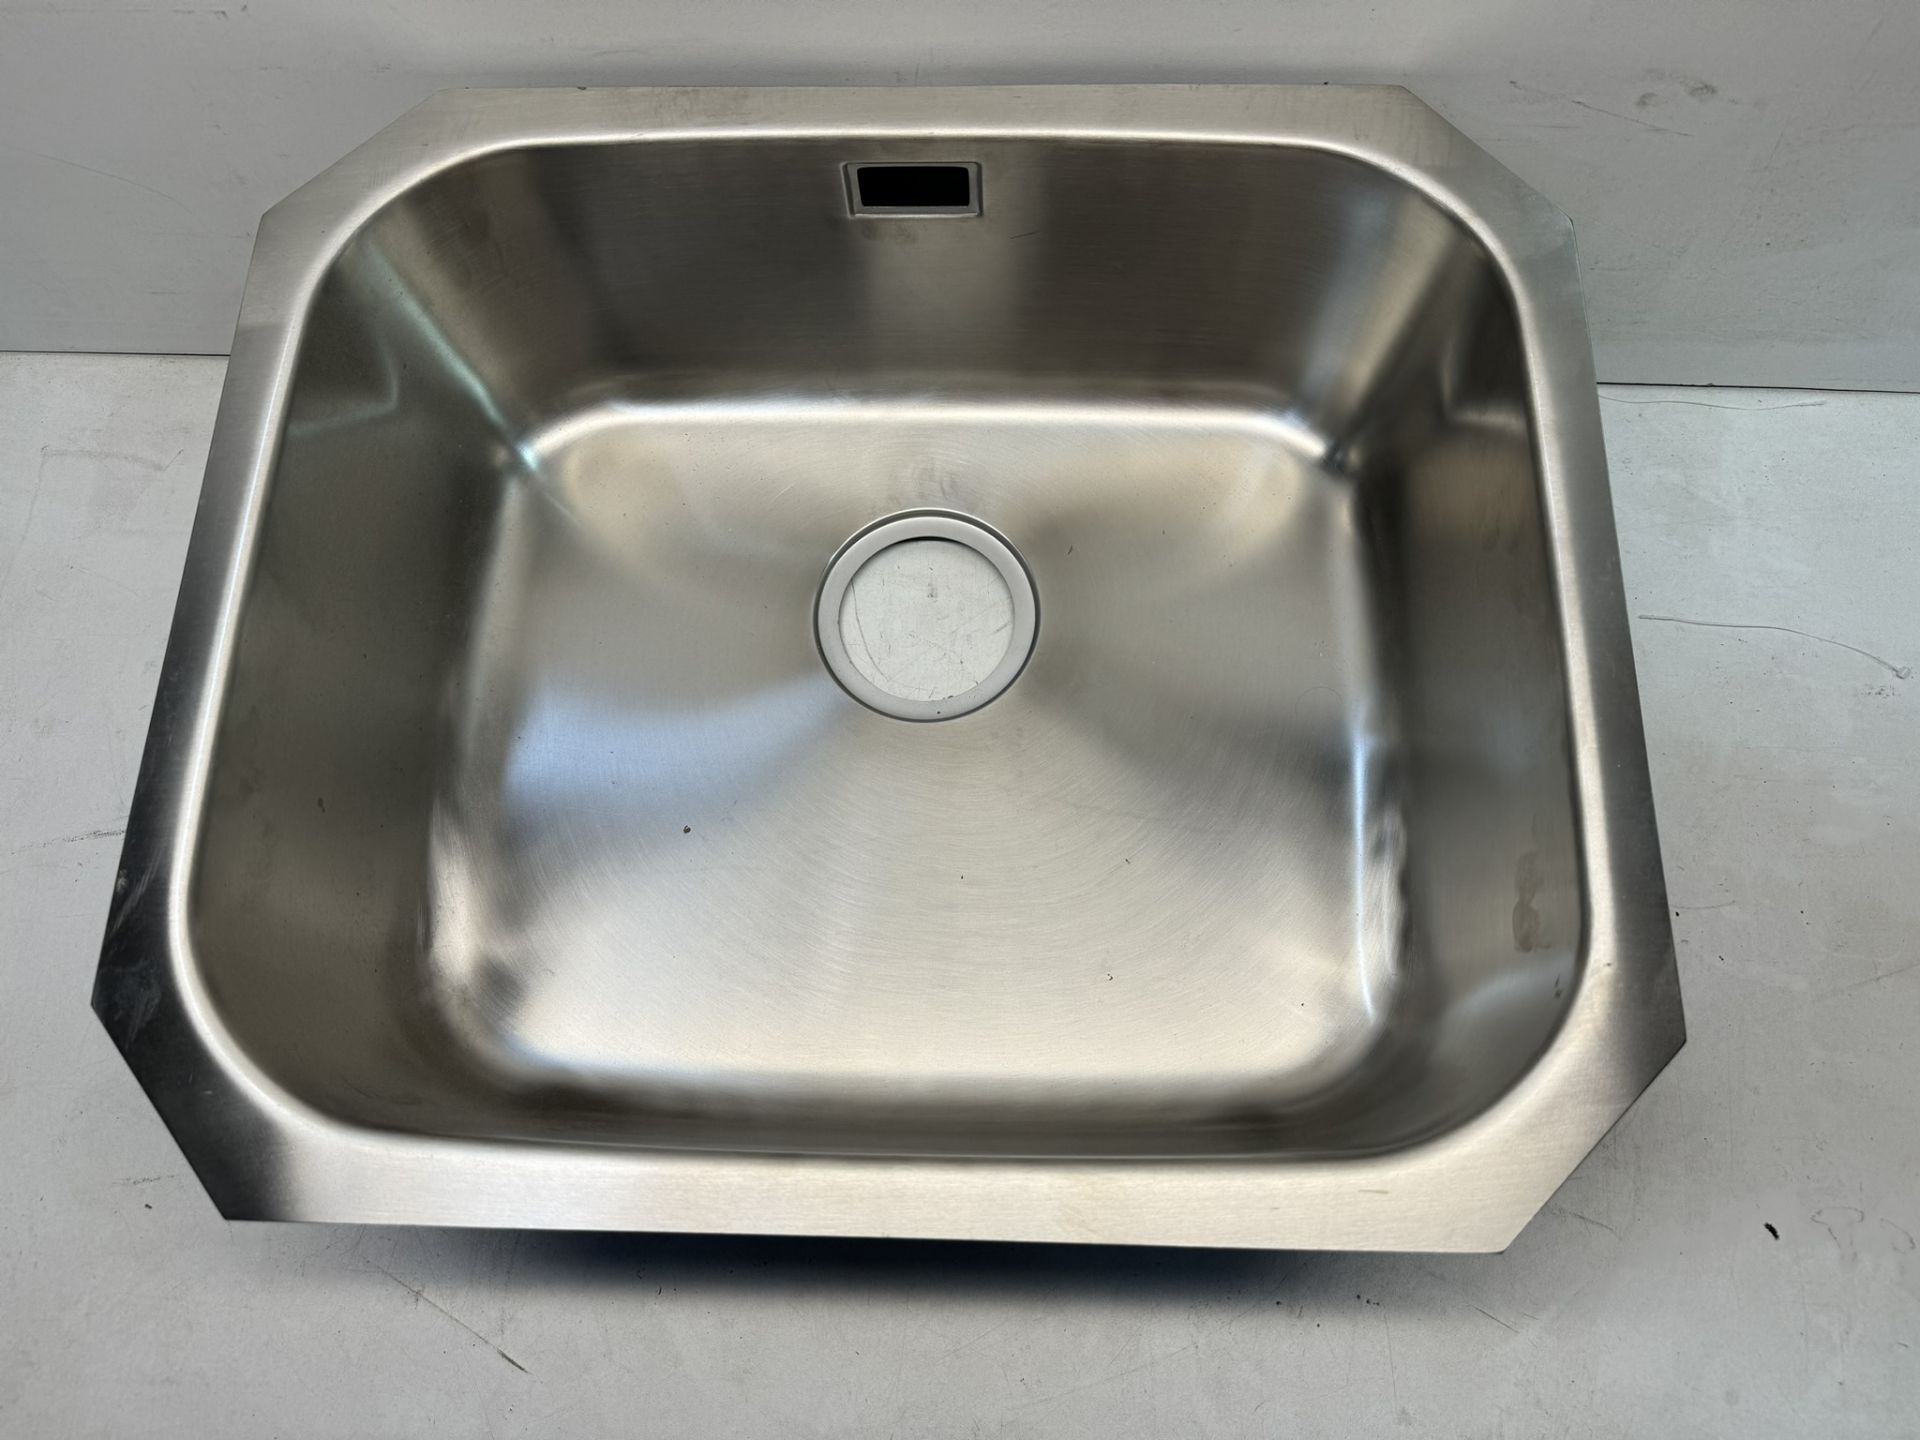 Ex-Display Unbranded Stainless Steel Single Bowl Sink - Image 2 of 3